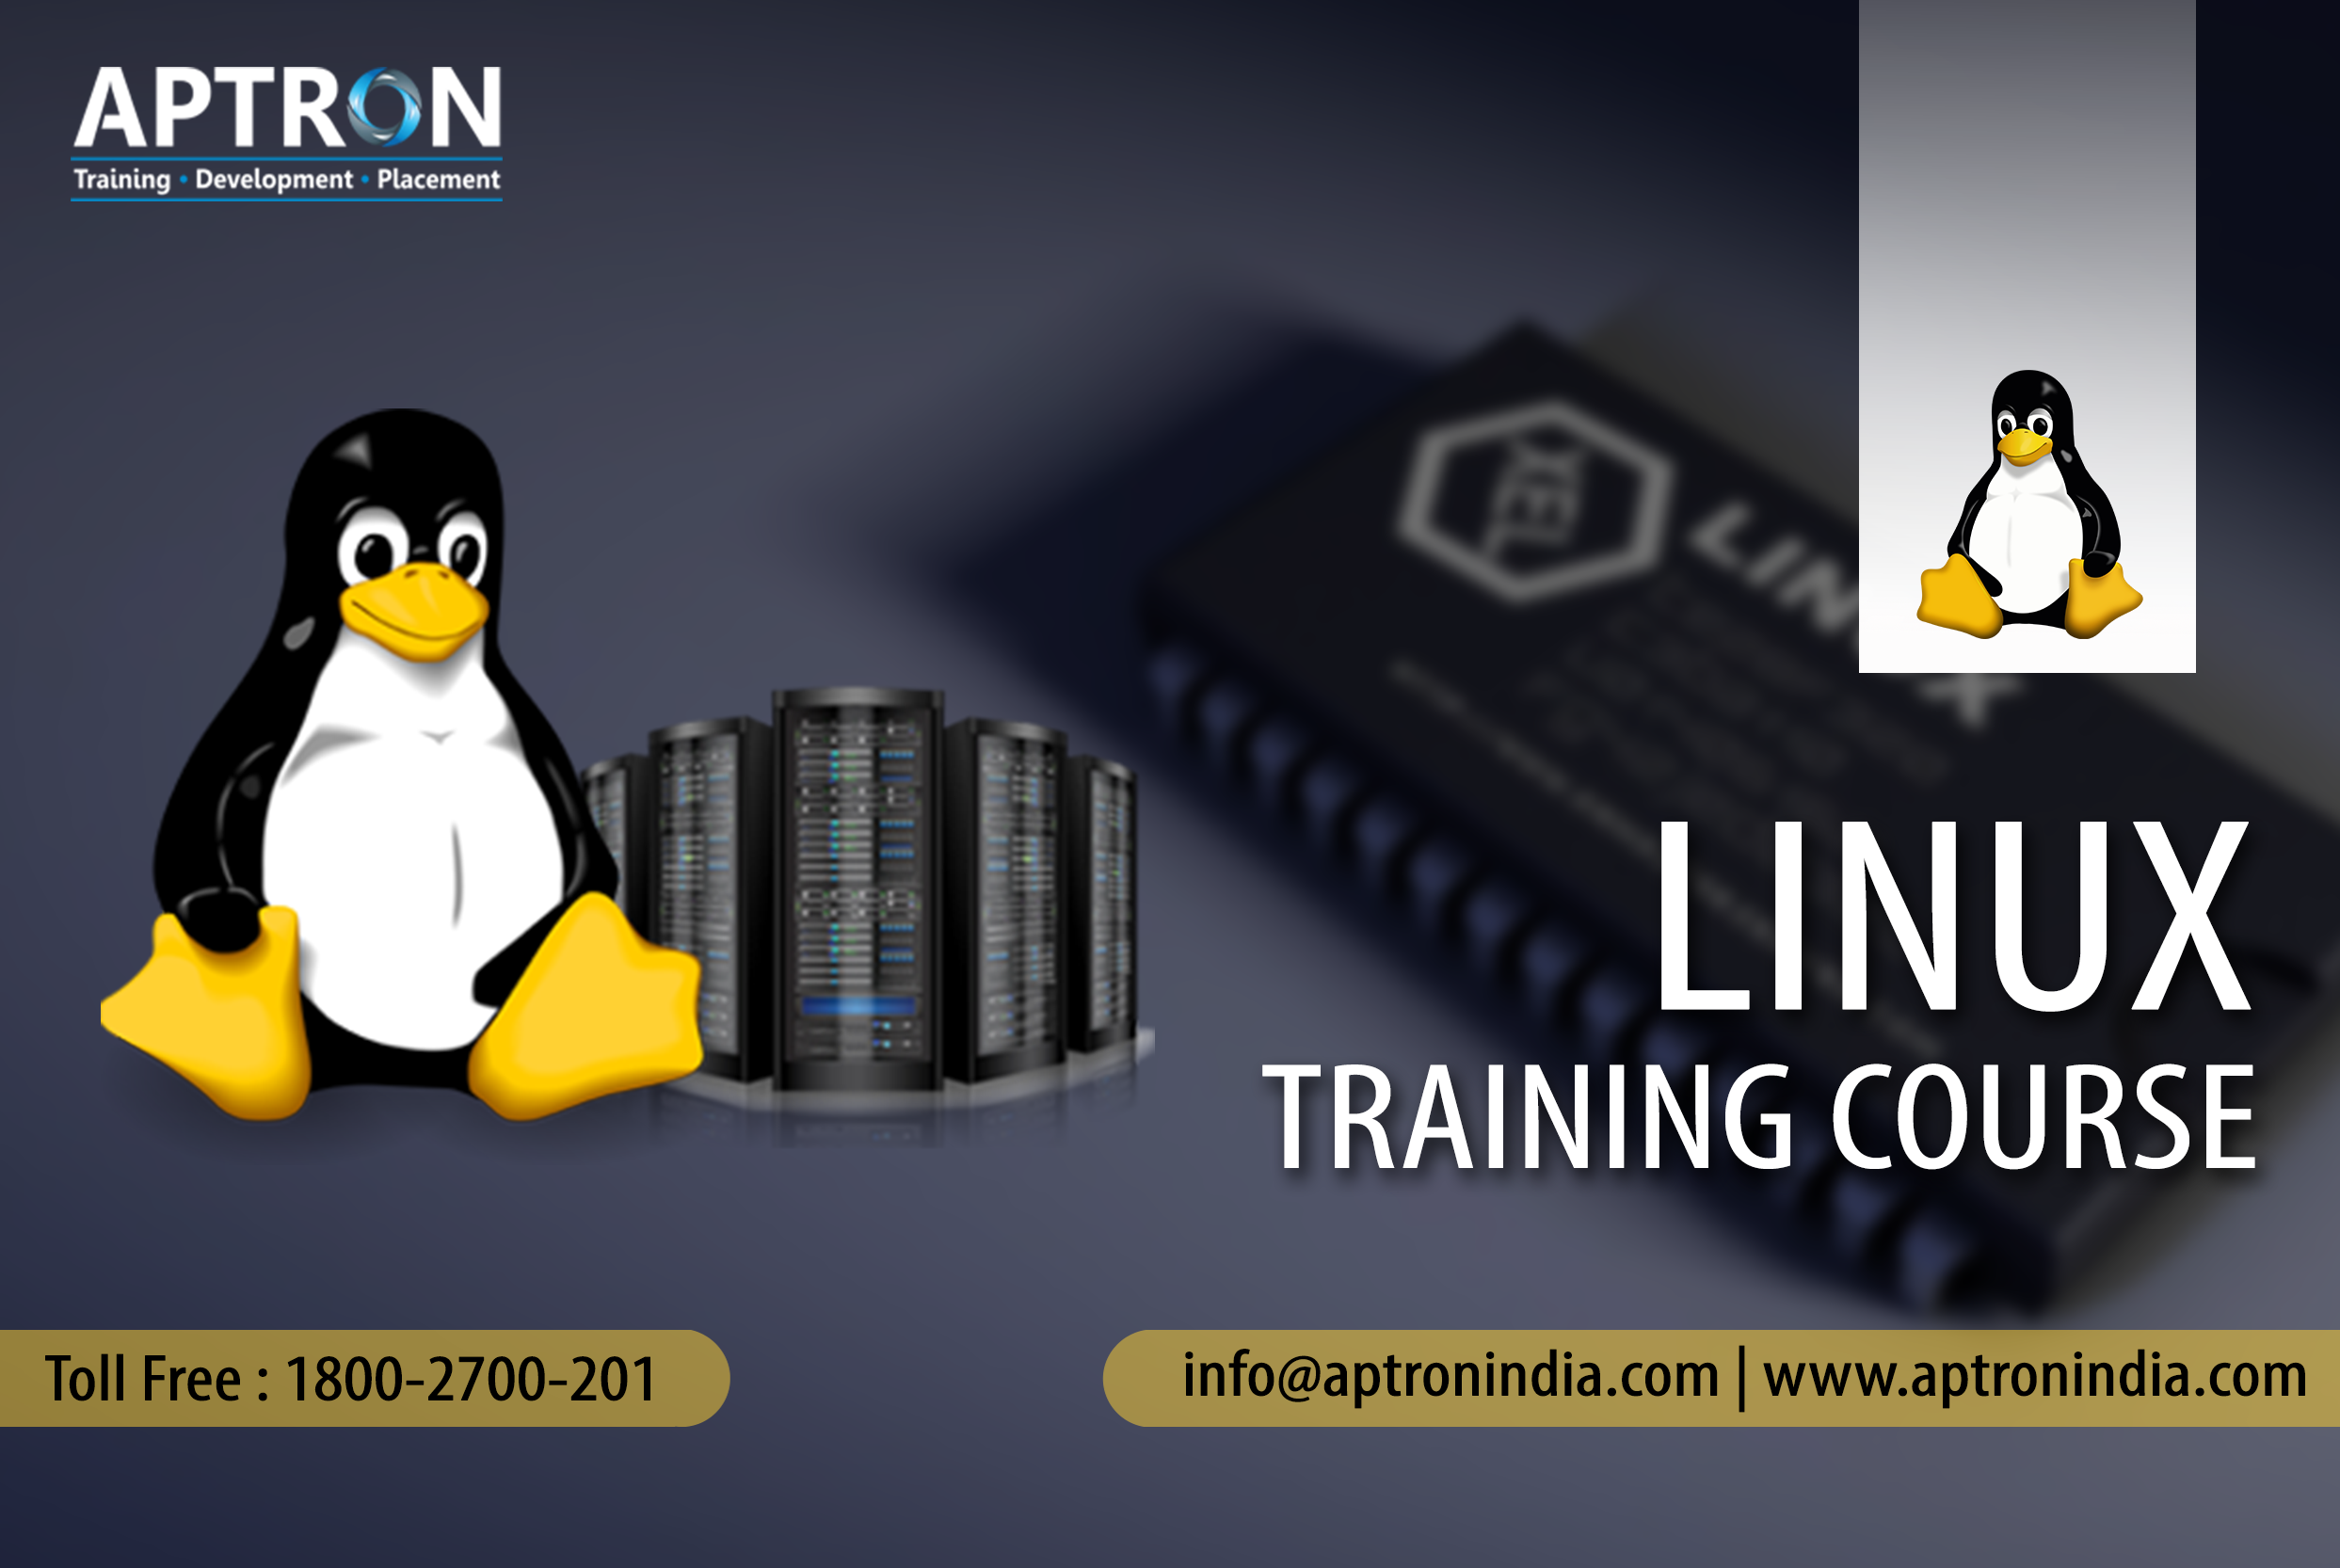 Linux Training Course in Gurgaon - APTRON Gurgaon